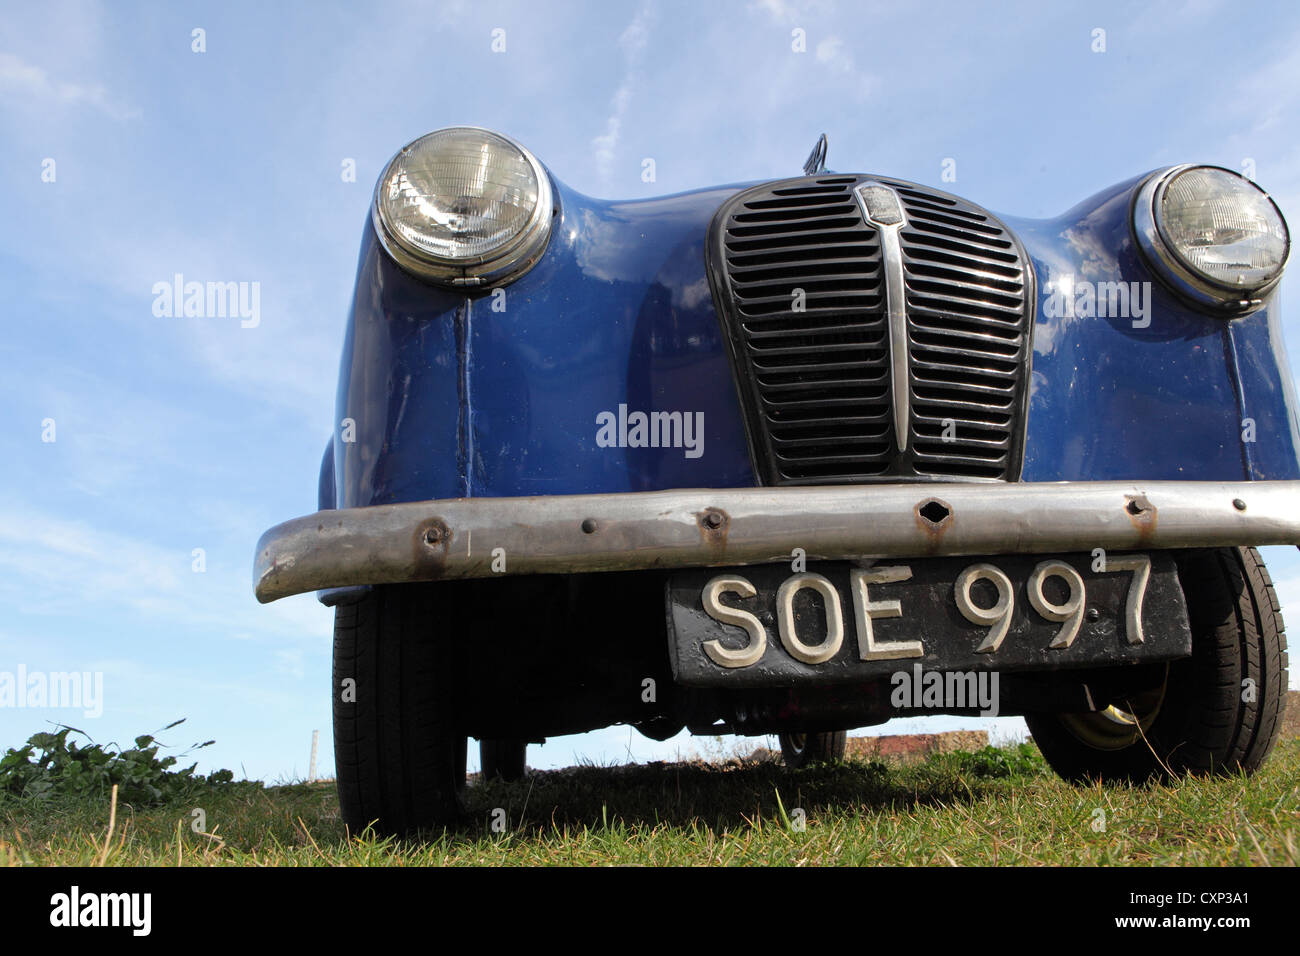 Blue Austin A30, British classic car, Suffolk, UK Stock Photo